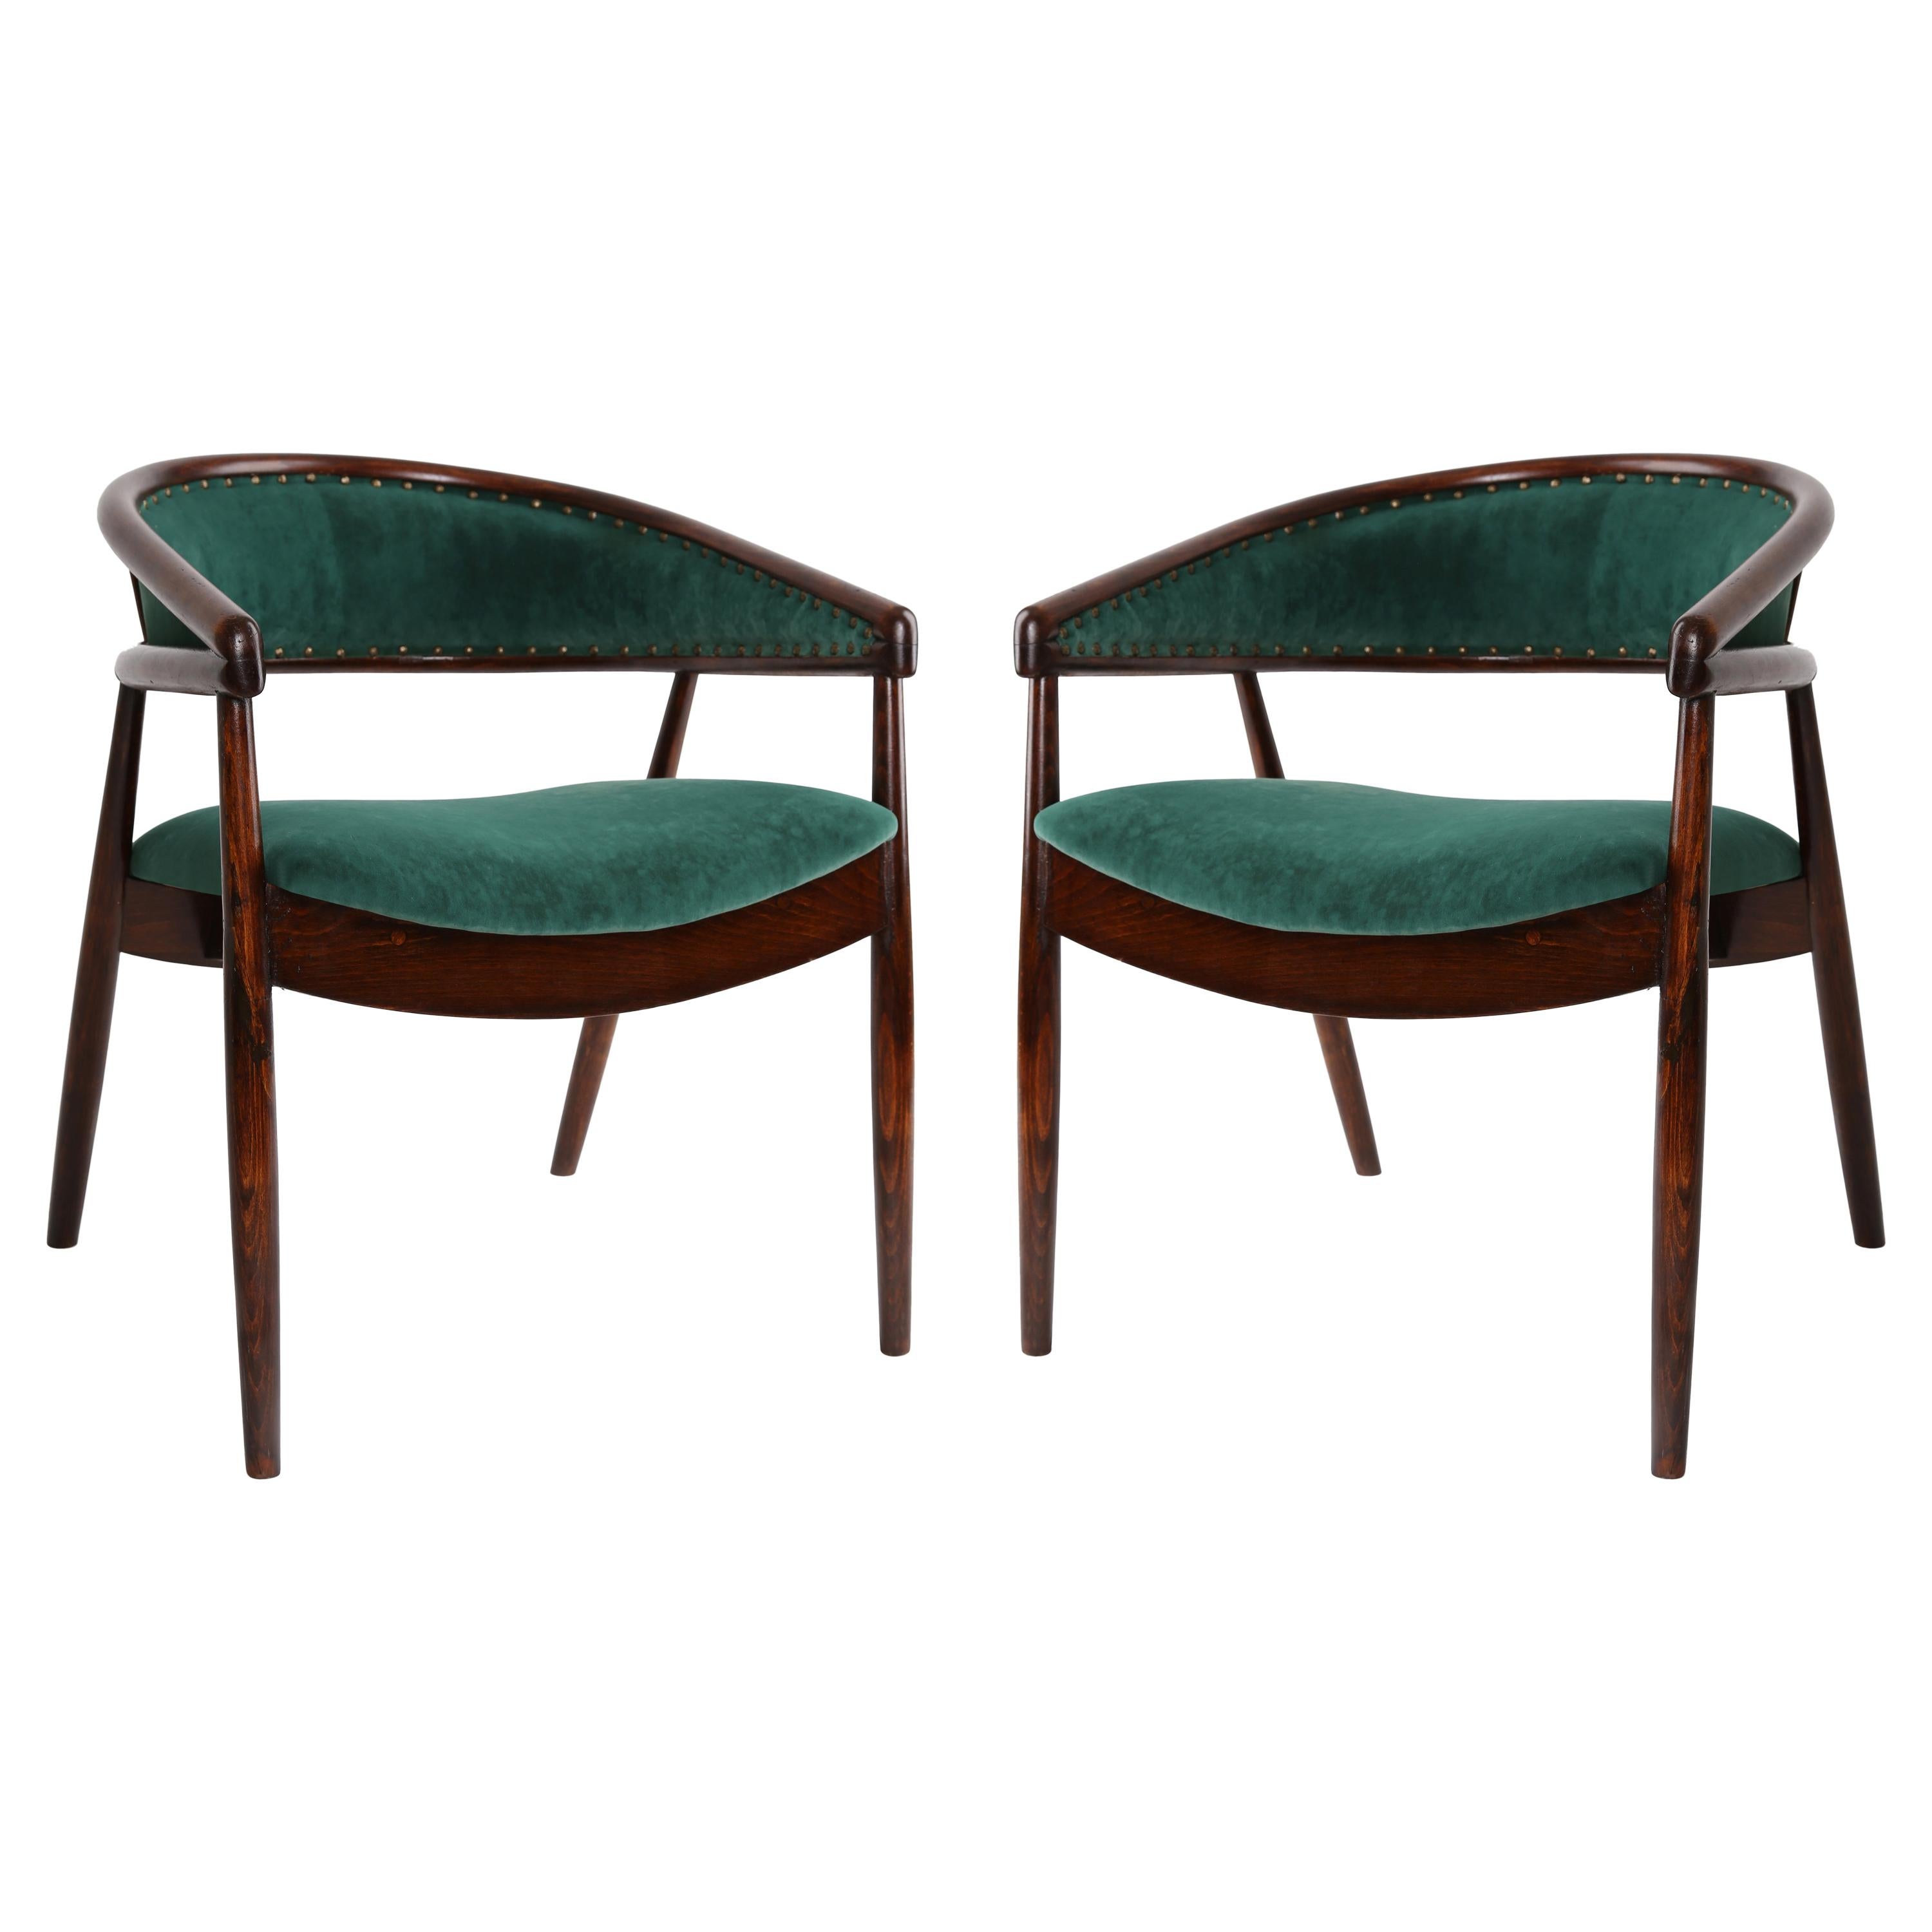 Set of Two James Mont Style Bent Beech Armchairs, Dark Green, B-3300 Type, 1960s